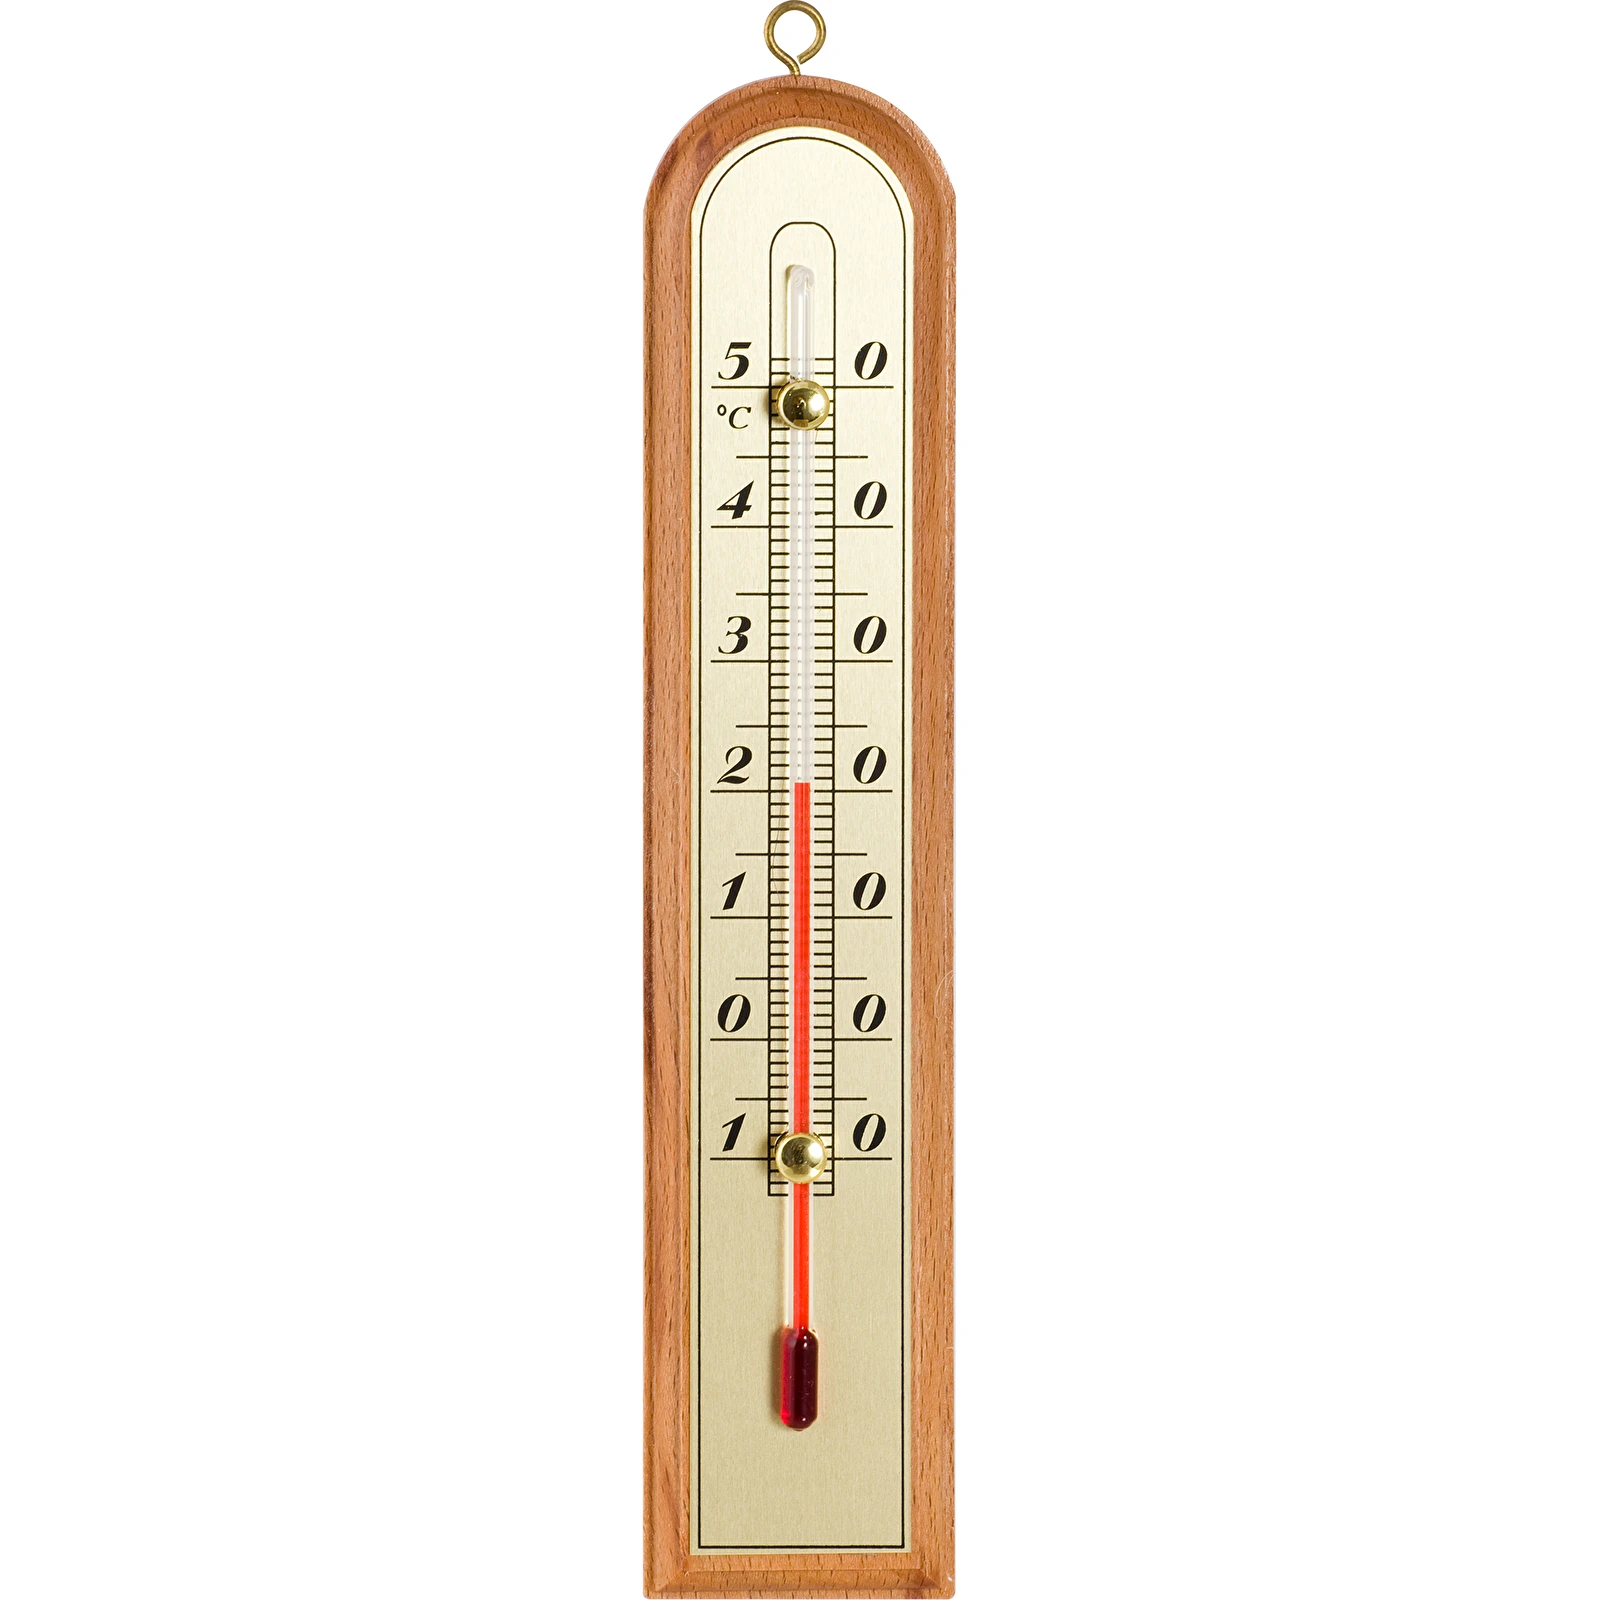 3Pcs Wooden Scale Thermometer Indoor Room Temperature Meter Sensor